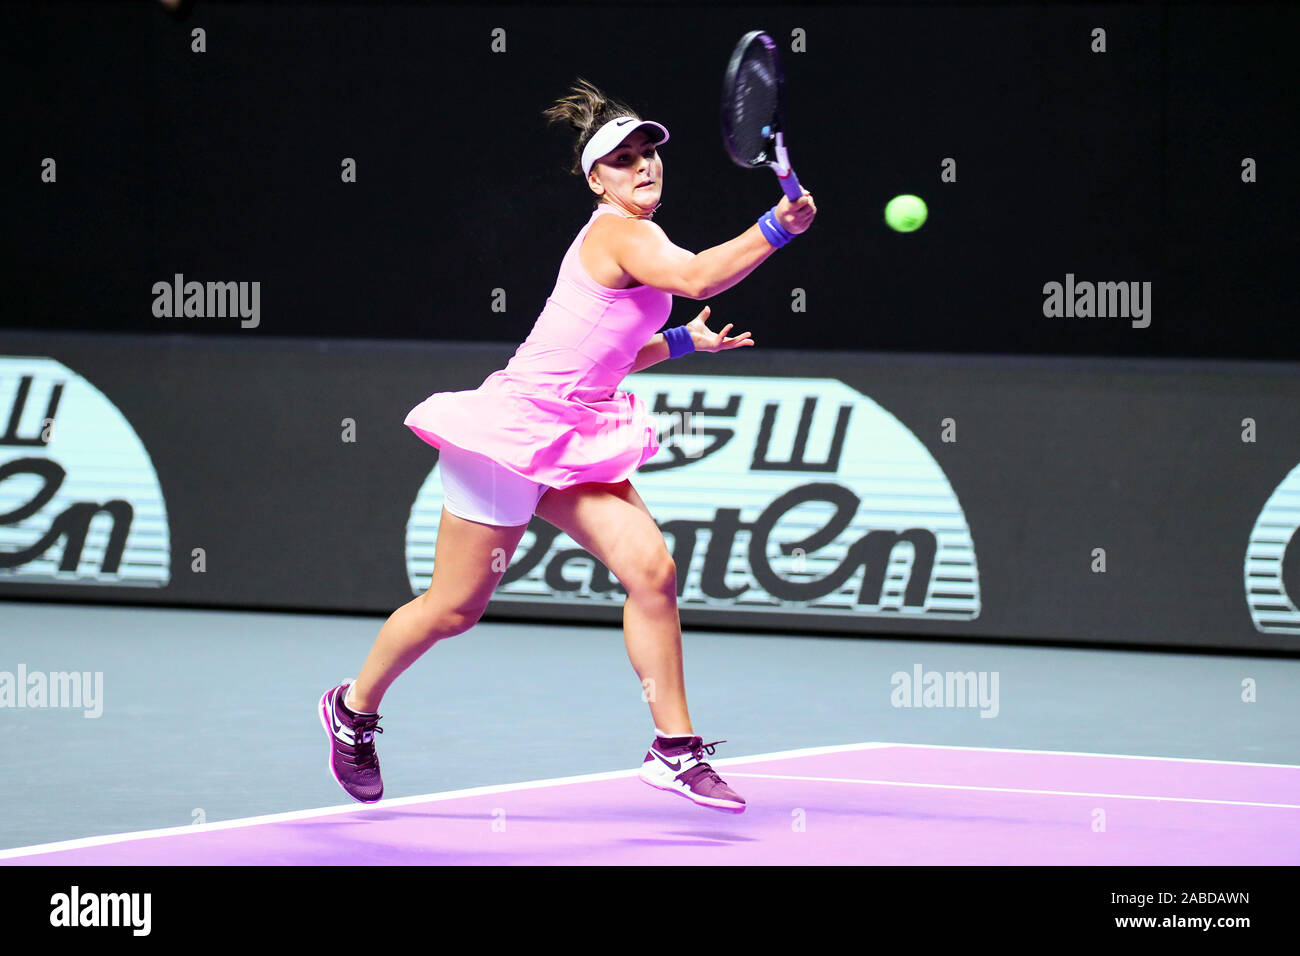 Canadian professional tennis player Bianca Andreescu konkurriert gegen Rumänische Tennisspieler Simona Halep während einer Gruppe der WTA Fin Stockfoto